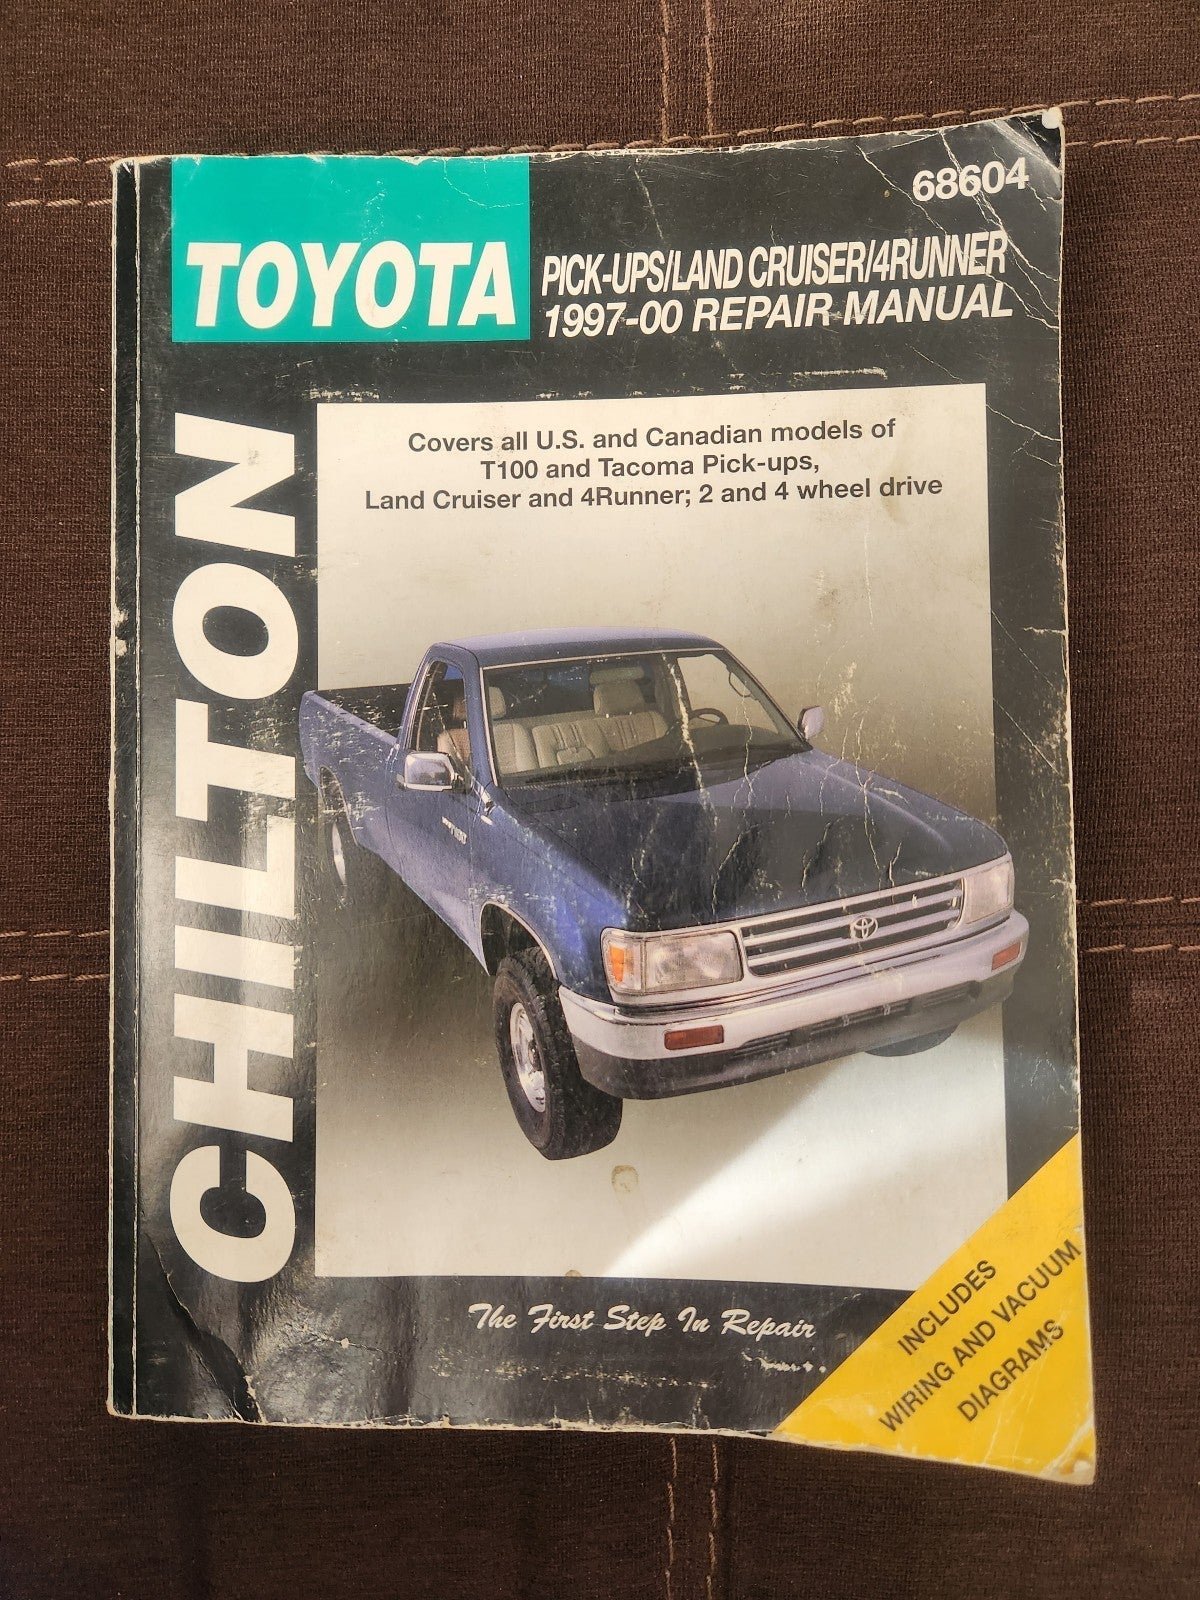 Chilton Toyota Repair Manual 68604 4AOt7nFYR